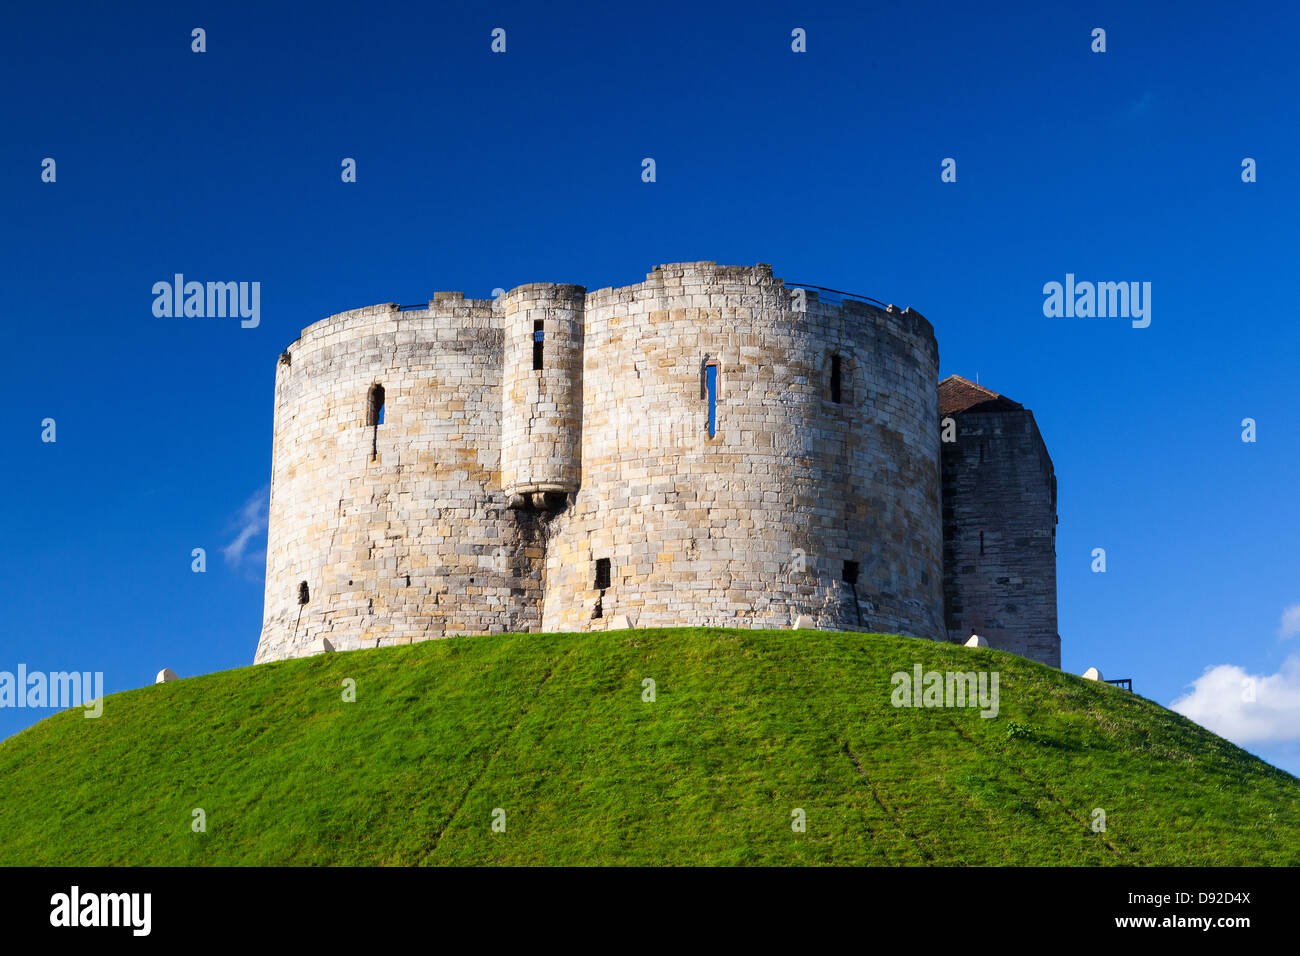 Famosa Torre di Clifford su una collina solitaria a York in Inghilterra Foto Stock